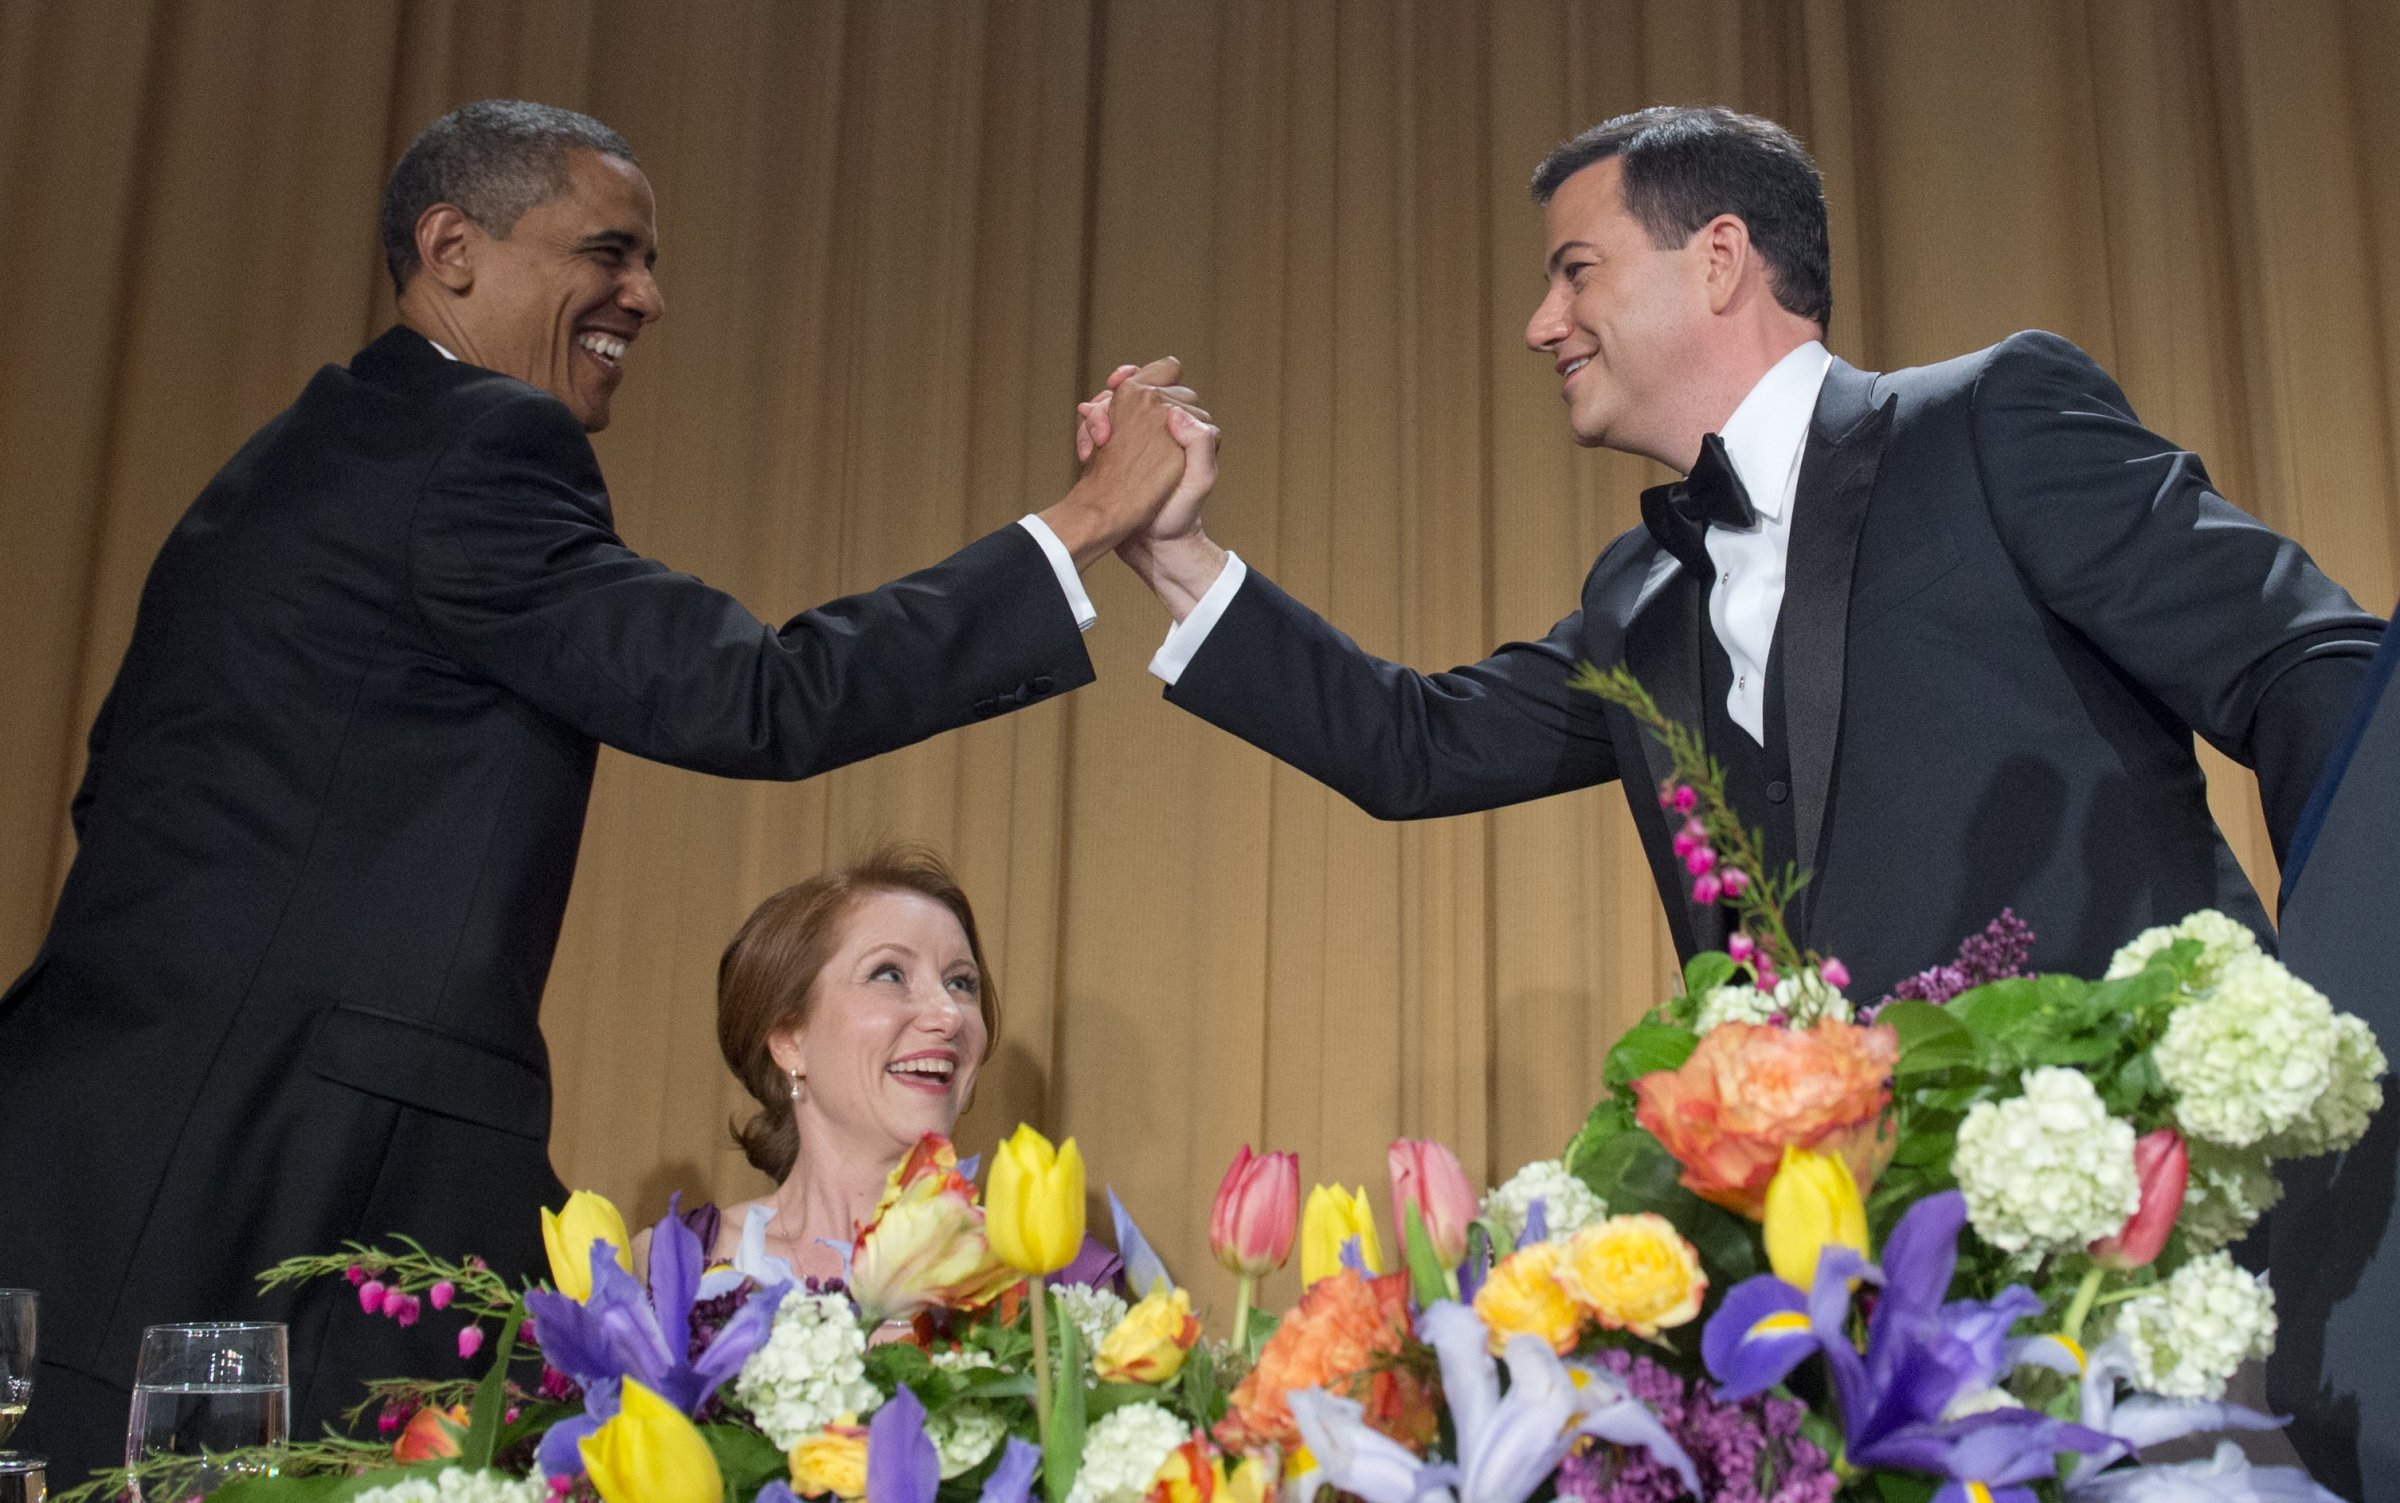 US President Barack Obama high-fives television host Jimmy Kimmel (R) during the White House Correspondents Association Dinner in Washington on April 28, 2012.